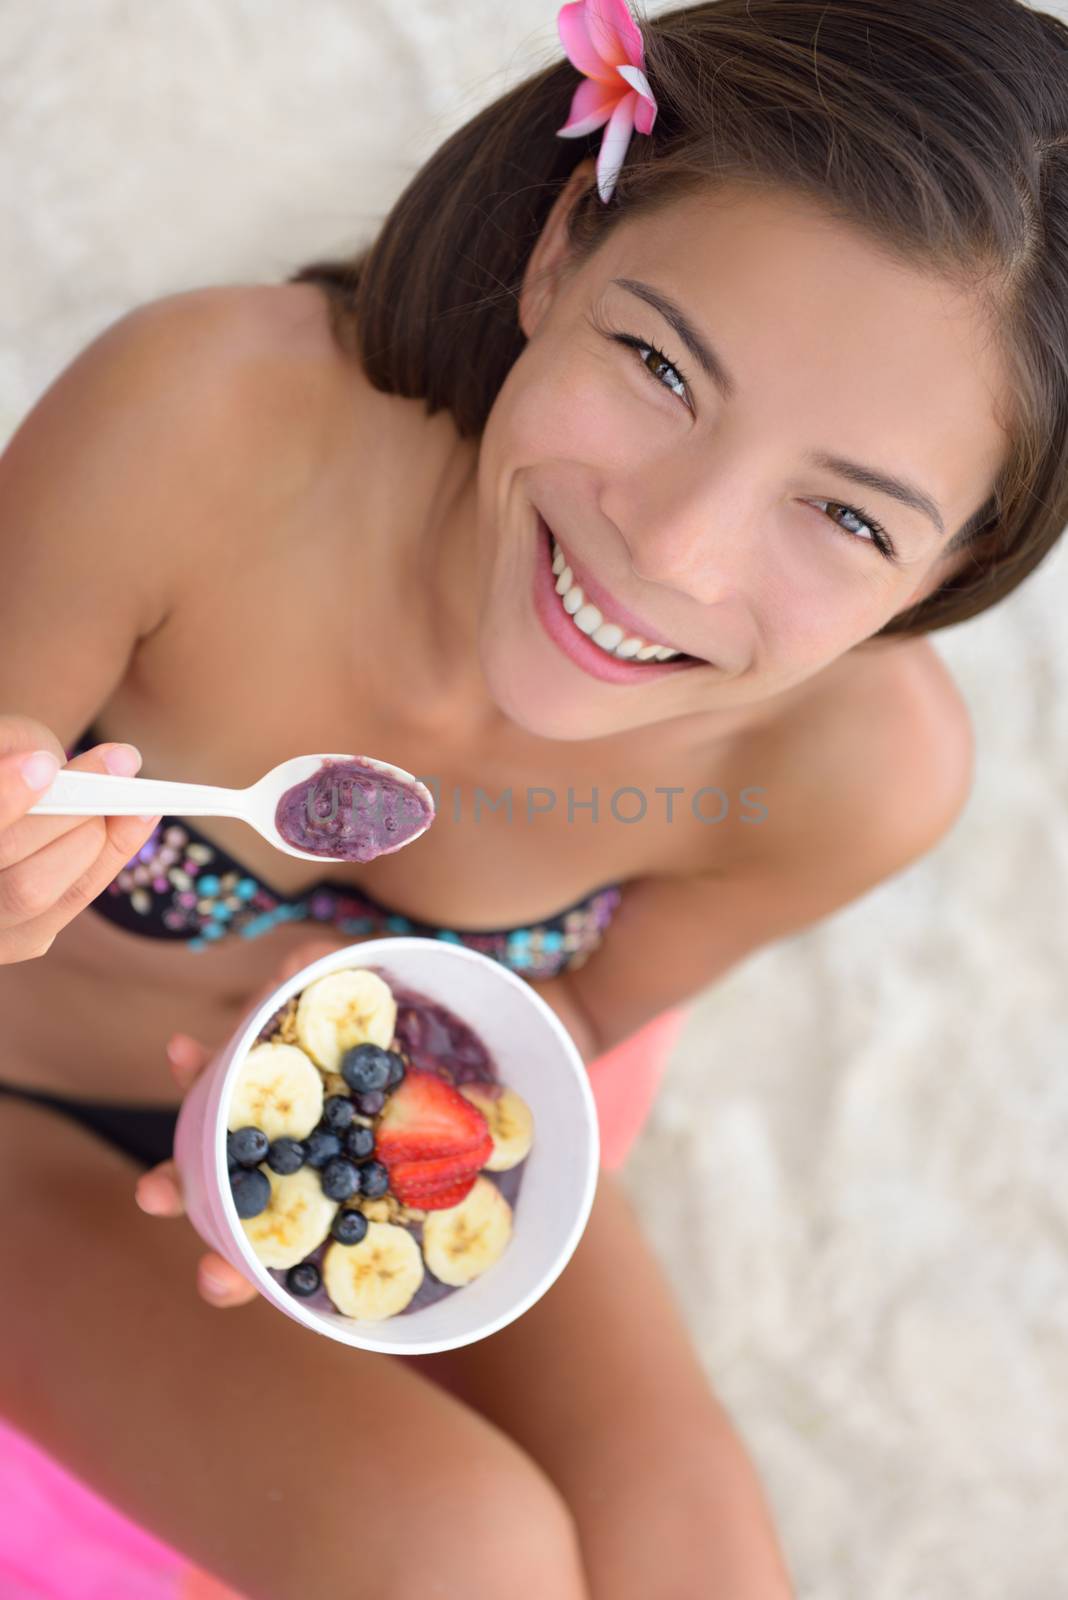 Acai bowl - woman eating healthy food on beach by Maridav